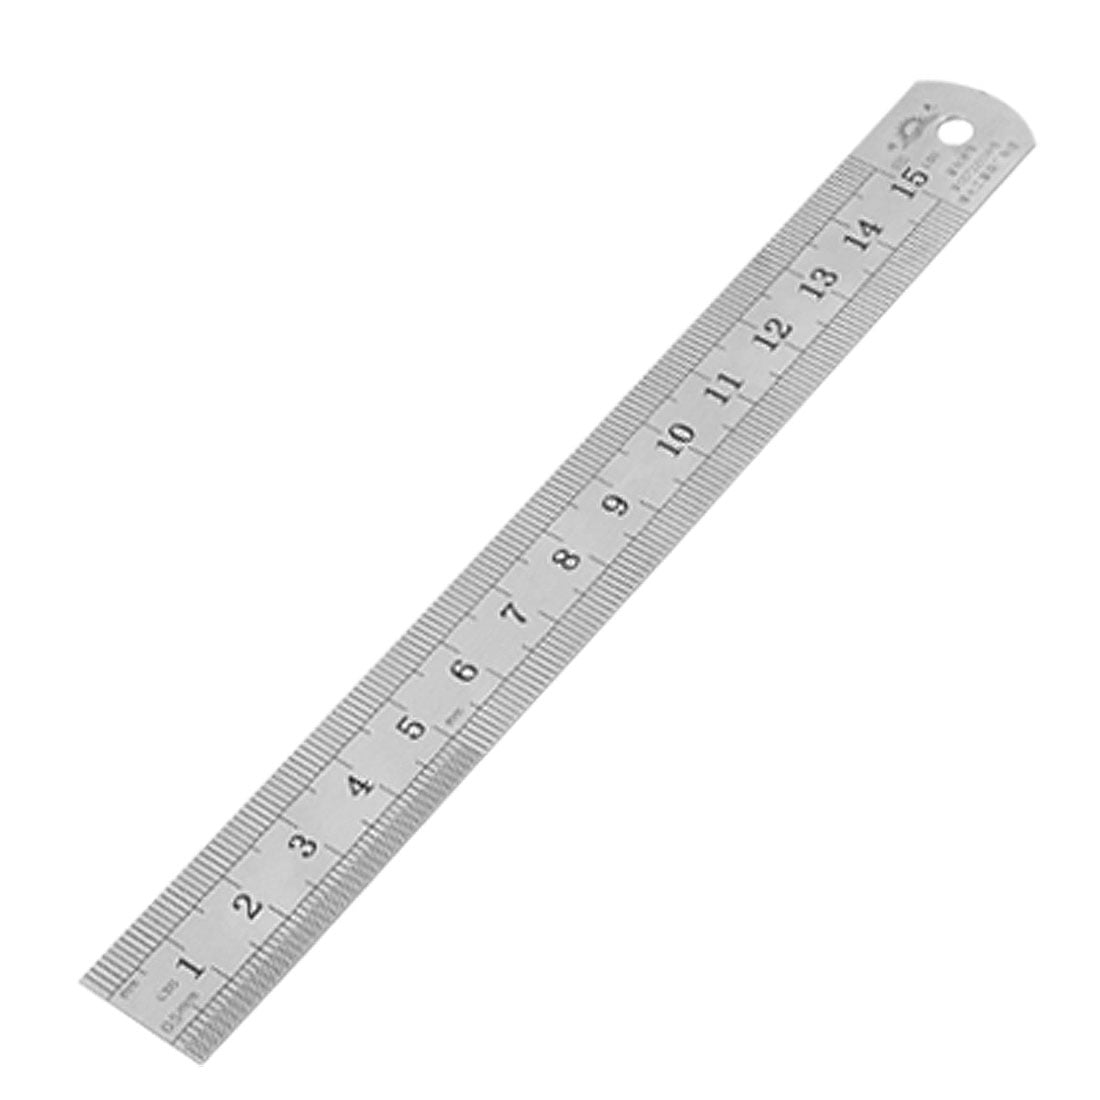 15cm 6 Inch Stainless Metal Ruler Measuring Tool Walmart Canada